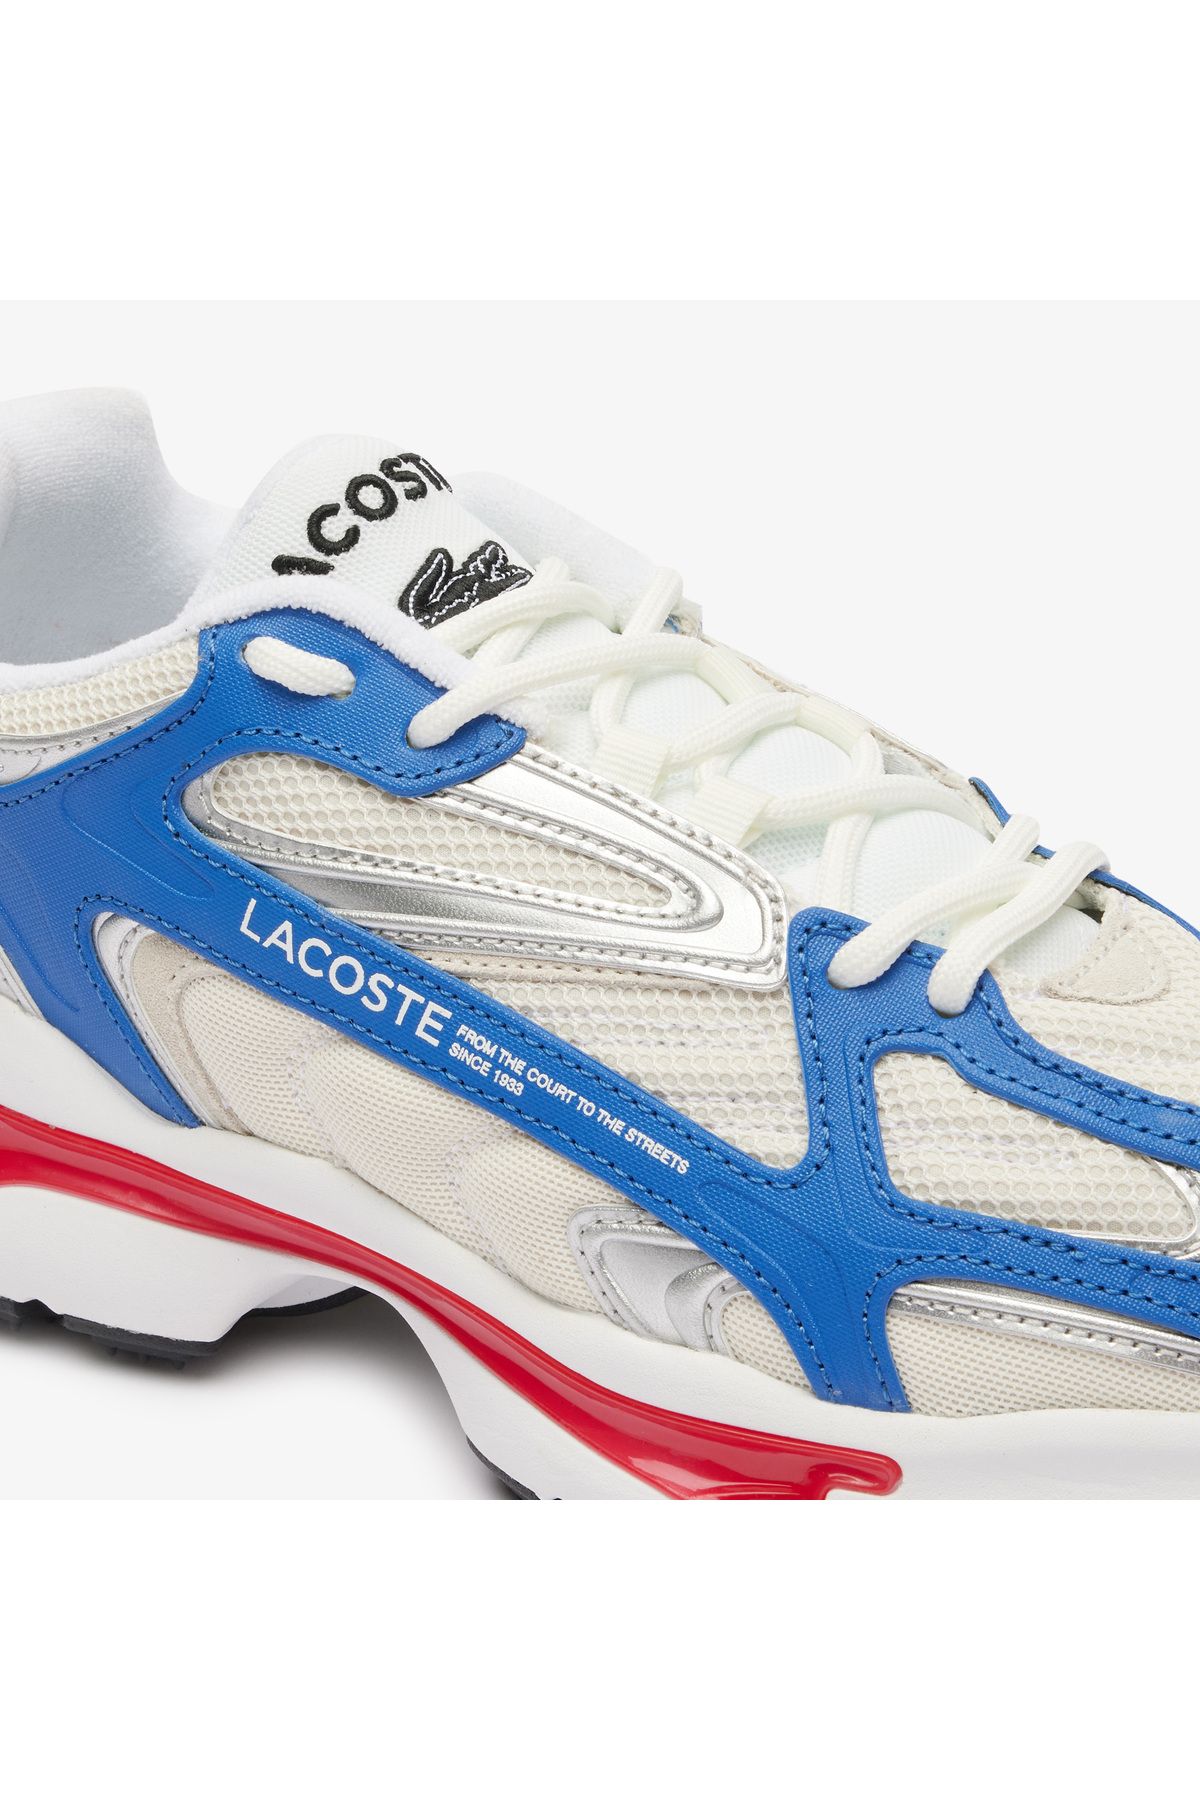 Lacoste Lacoste كفش كتانى ورزشى مردانه مدل Sport L003 2k24